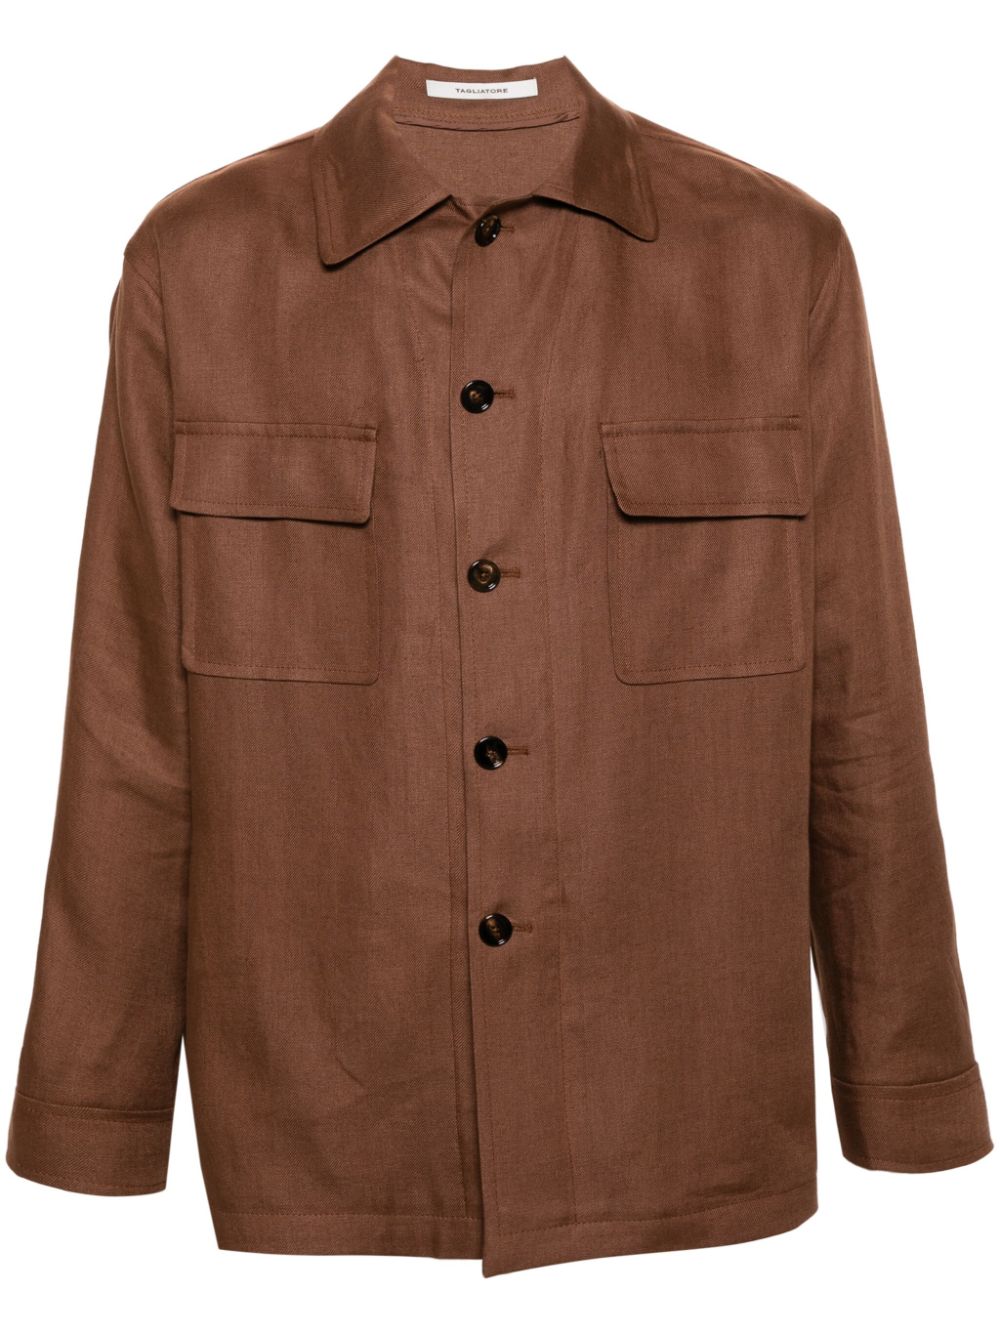 Tagliatore Damian linen shirt jacket - Brown von Tagliatore